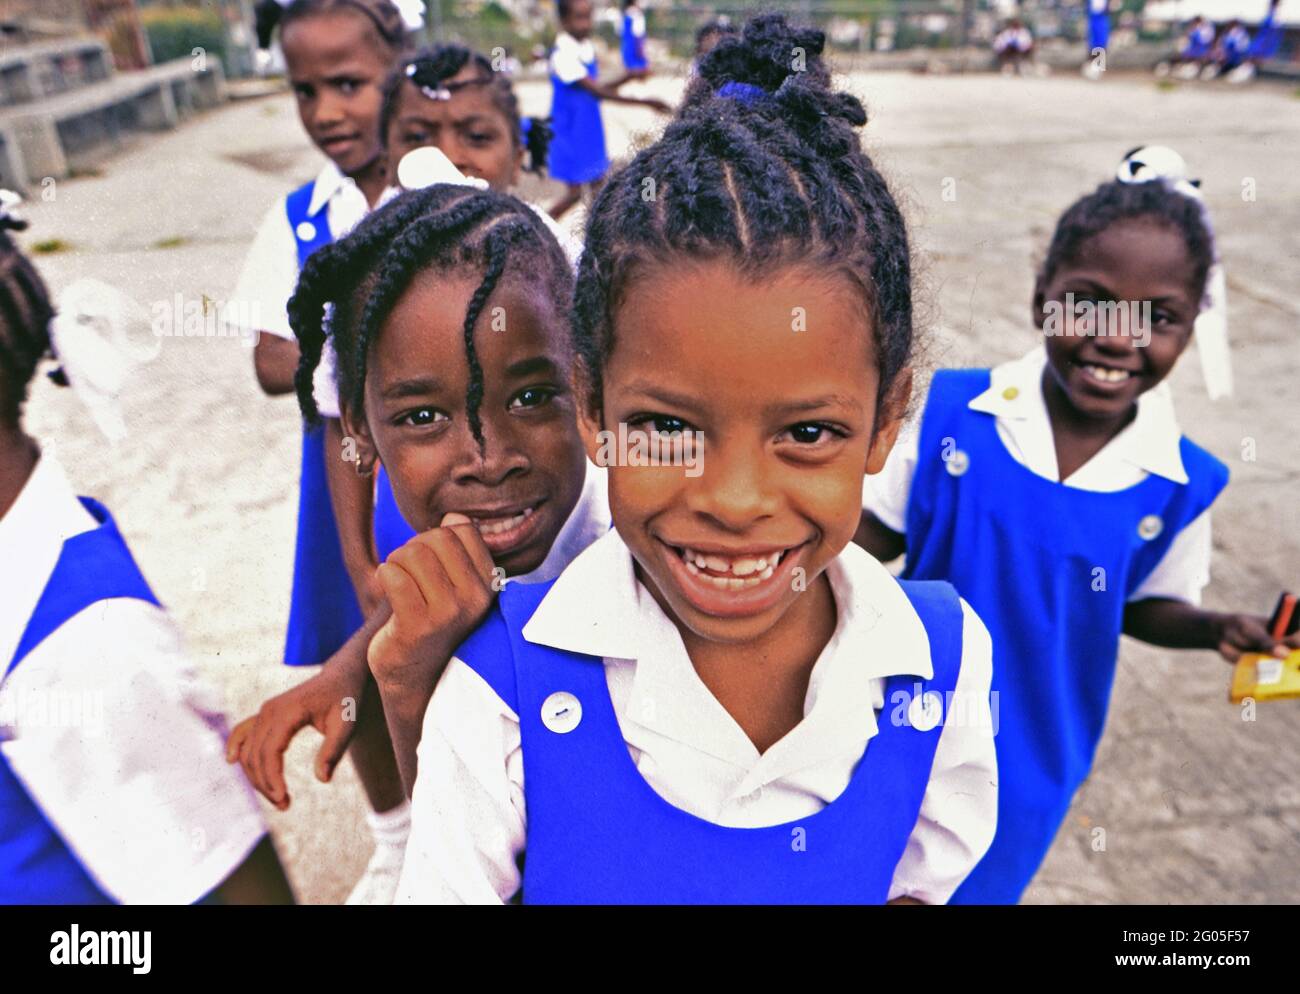 1990s Grenada - Local smiling schoolgirls in Catholic school uniforms return after lunch ca. 1998 Stock Photo